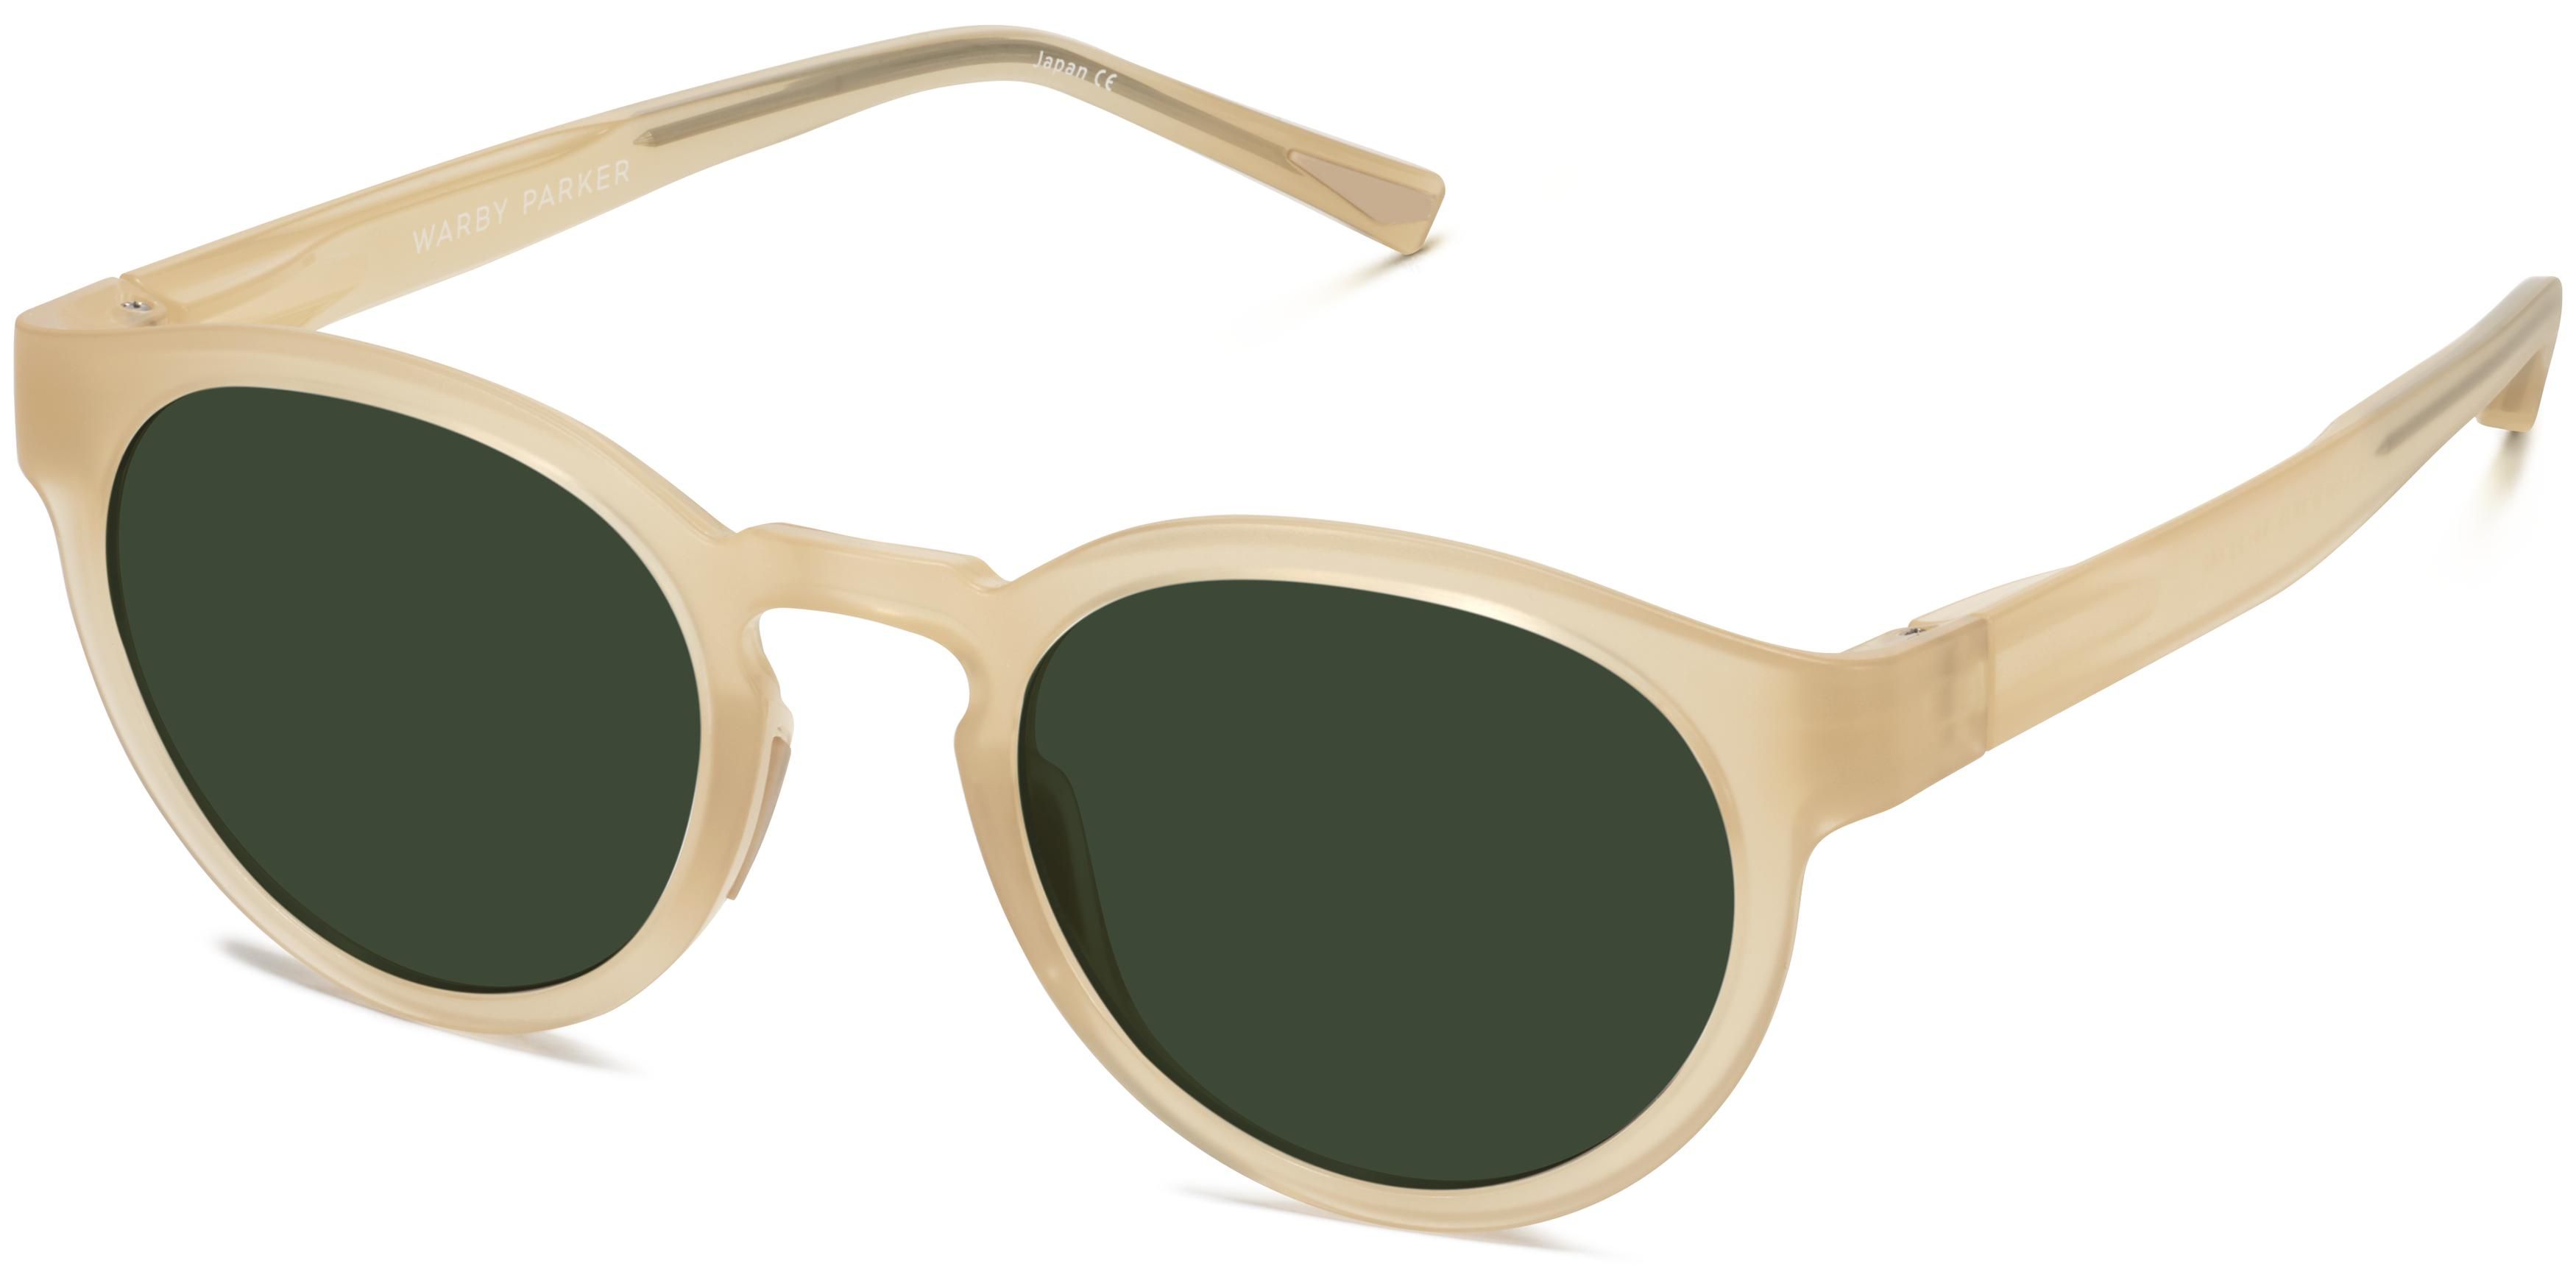 Callum Sunglasses in Buttermilk Matte | Warby Parker | Warby Parker (US)